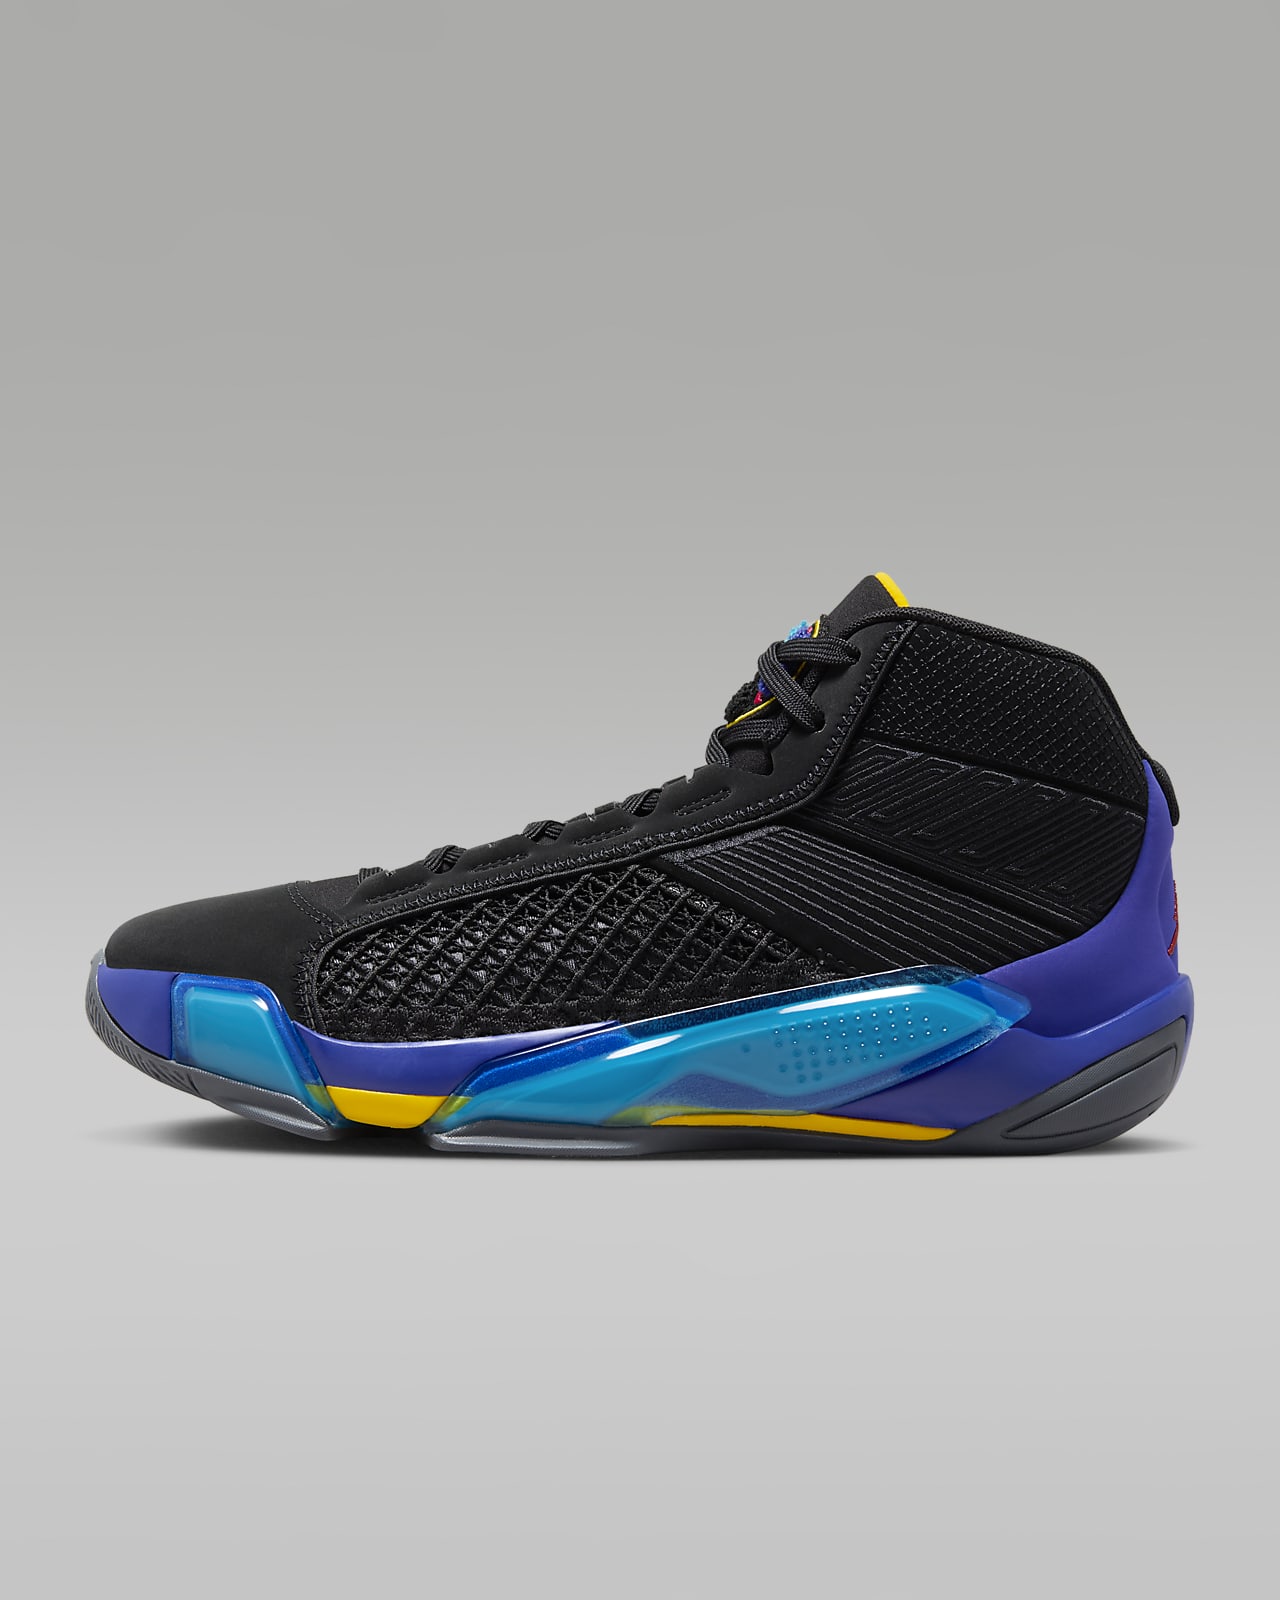 Air Jordan XXXVIII "Aqua" PF Basketball Shoes